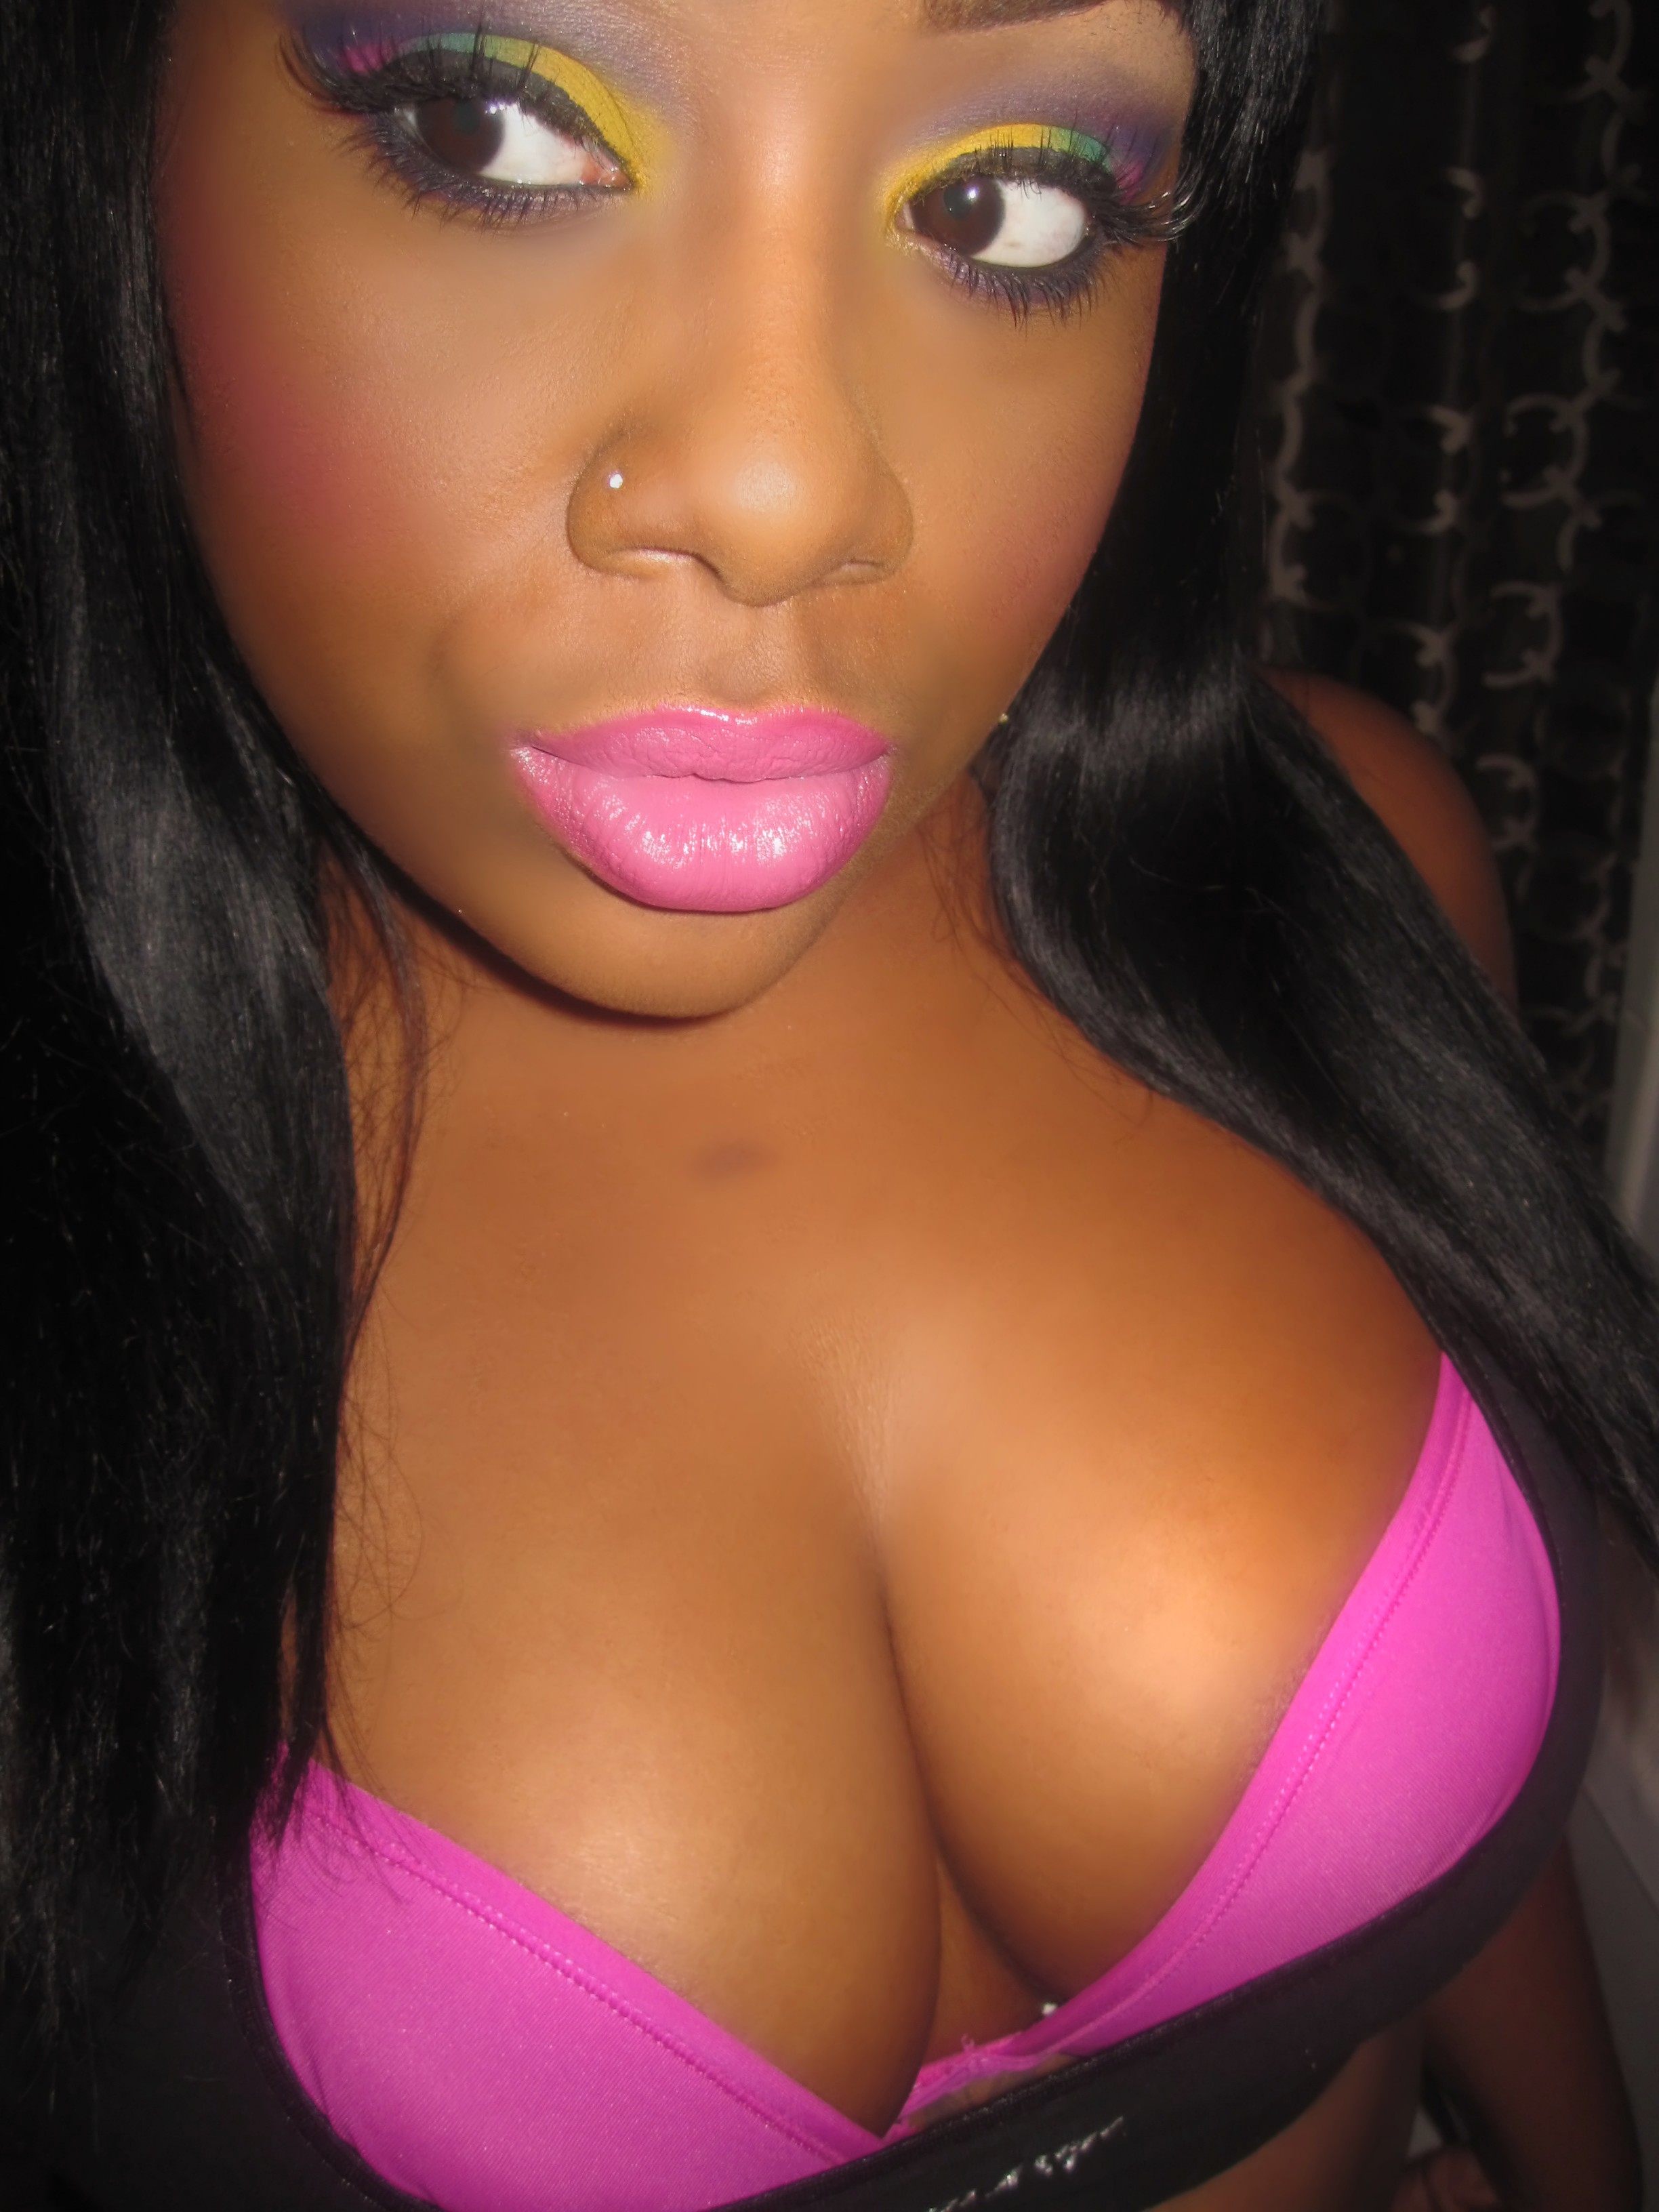 Nicki Minaj “Bedrock” Video Look | Glam S.C.A.M. Beauty2448 x 3264